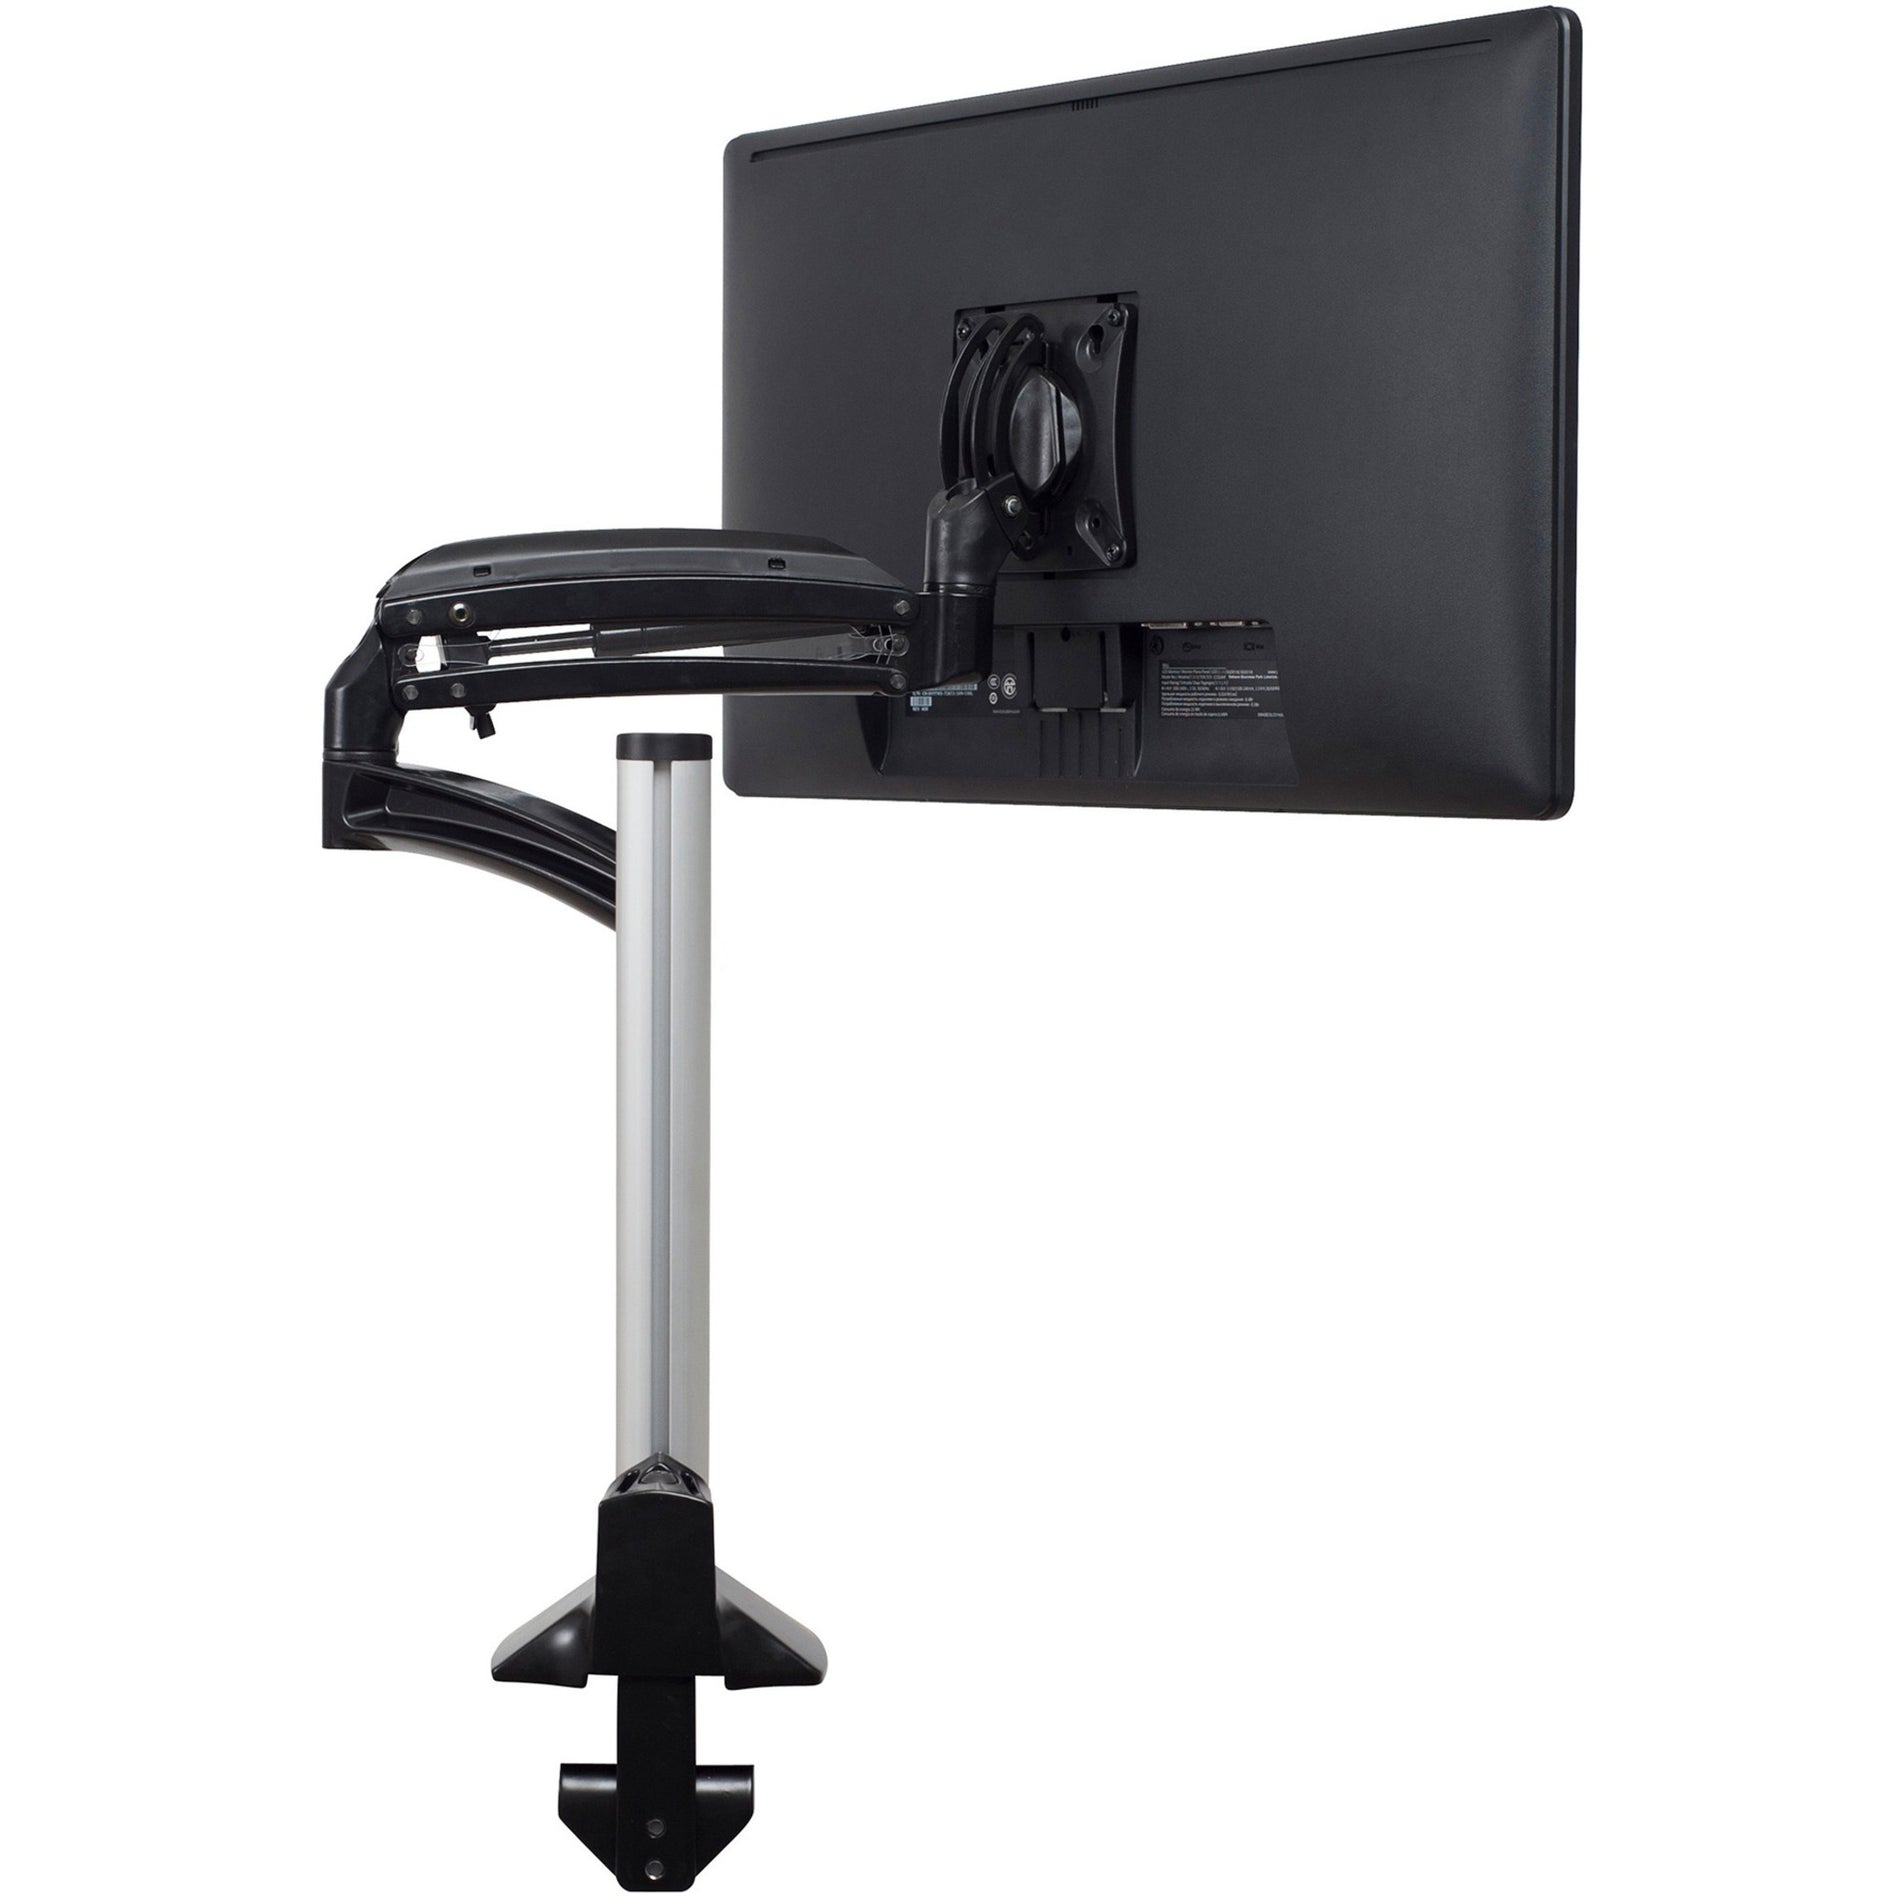 Chief K1C120BXRH Kontour Desk Mount for Flat Panel Display, Black, 10 Year Warranty